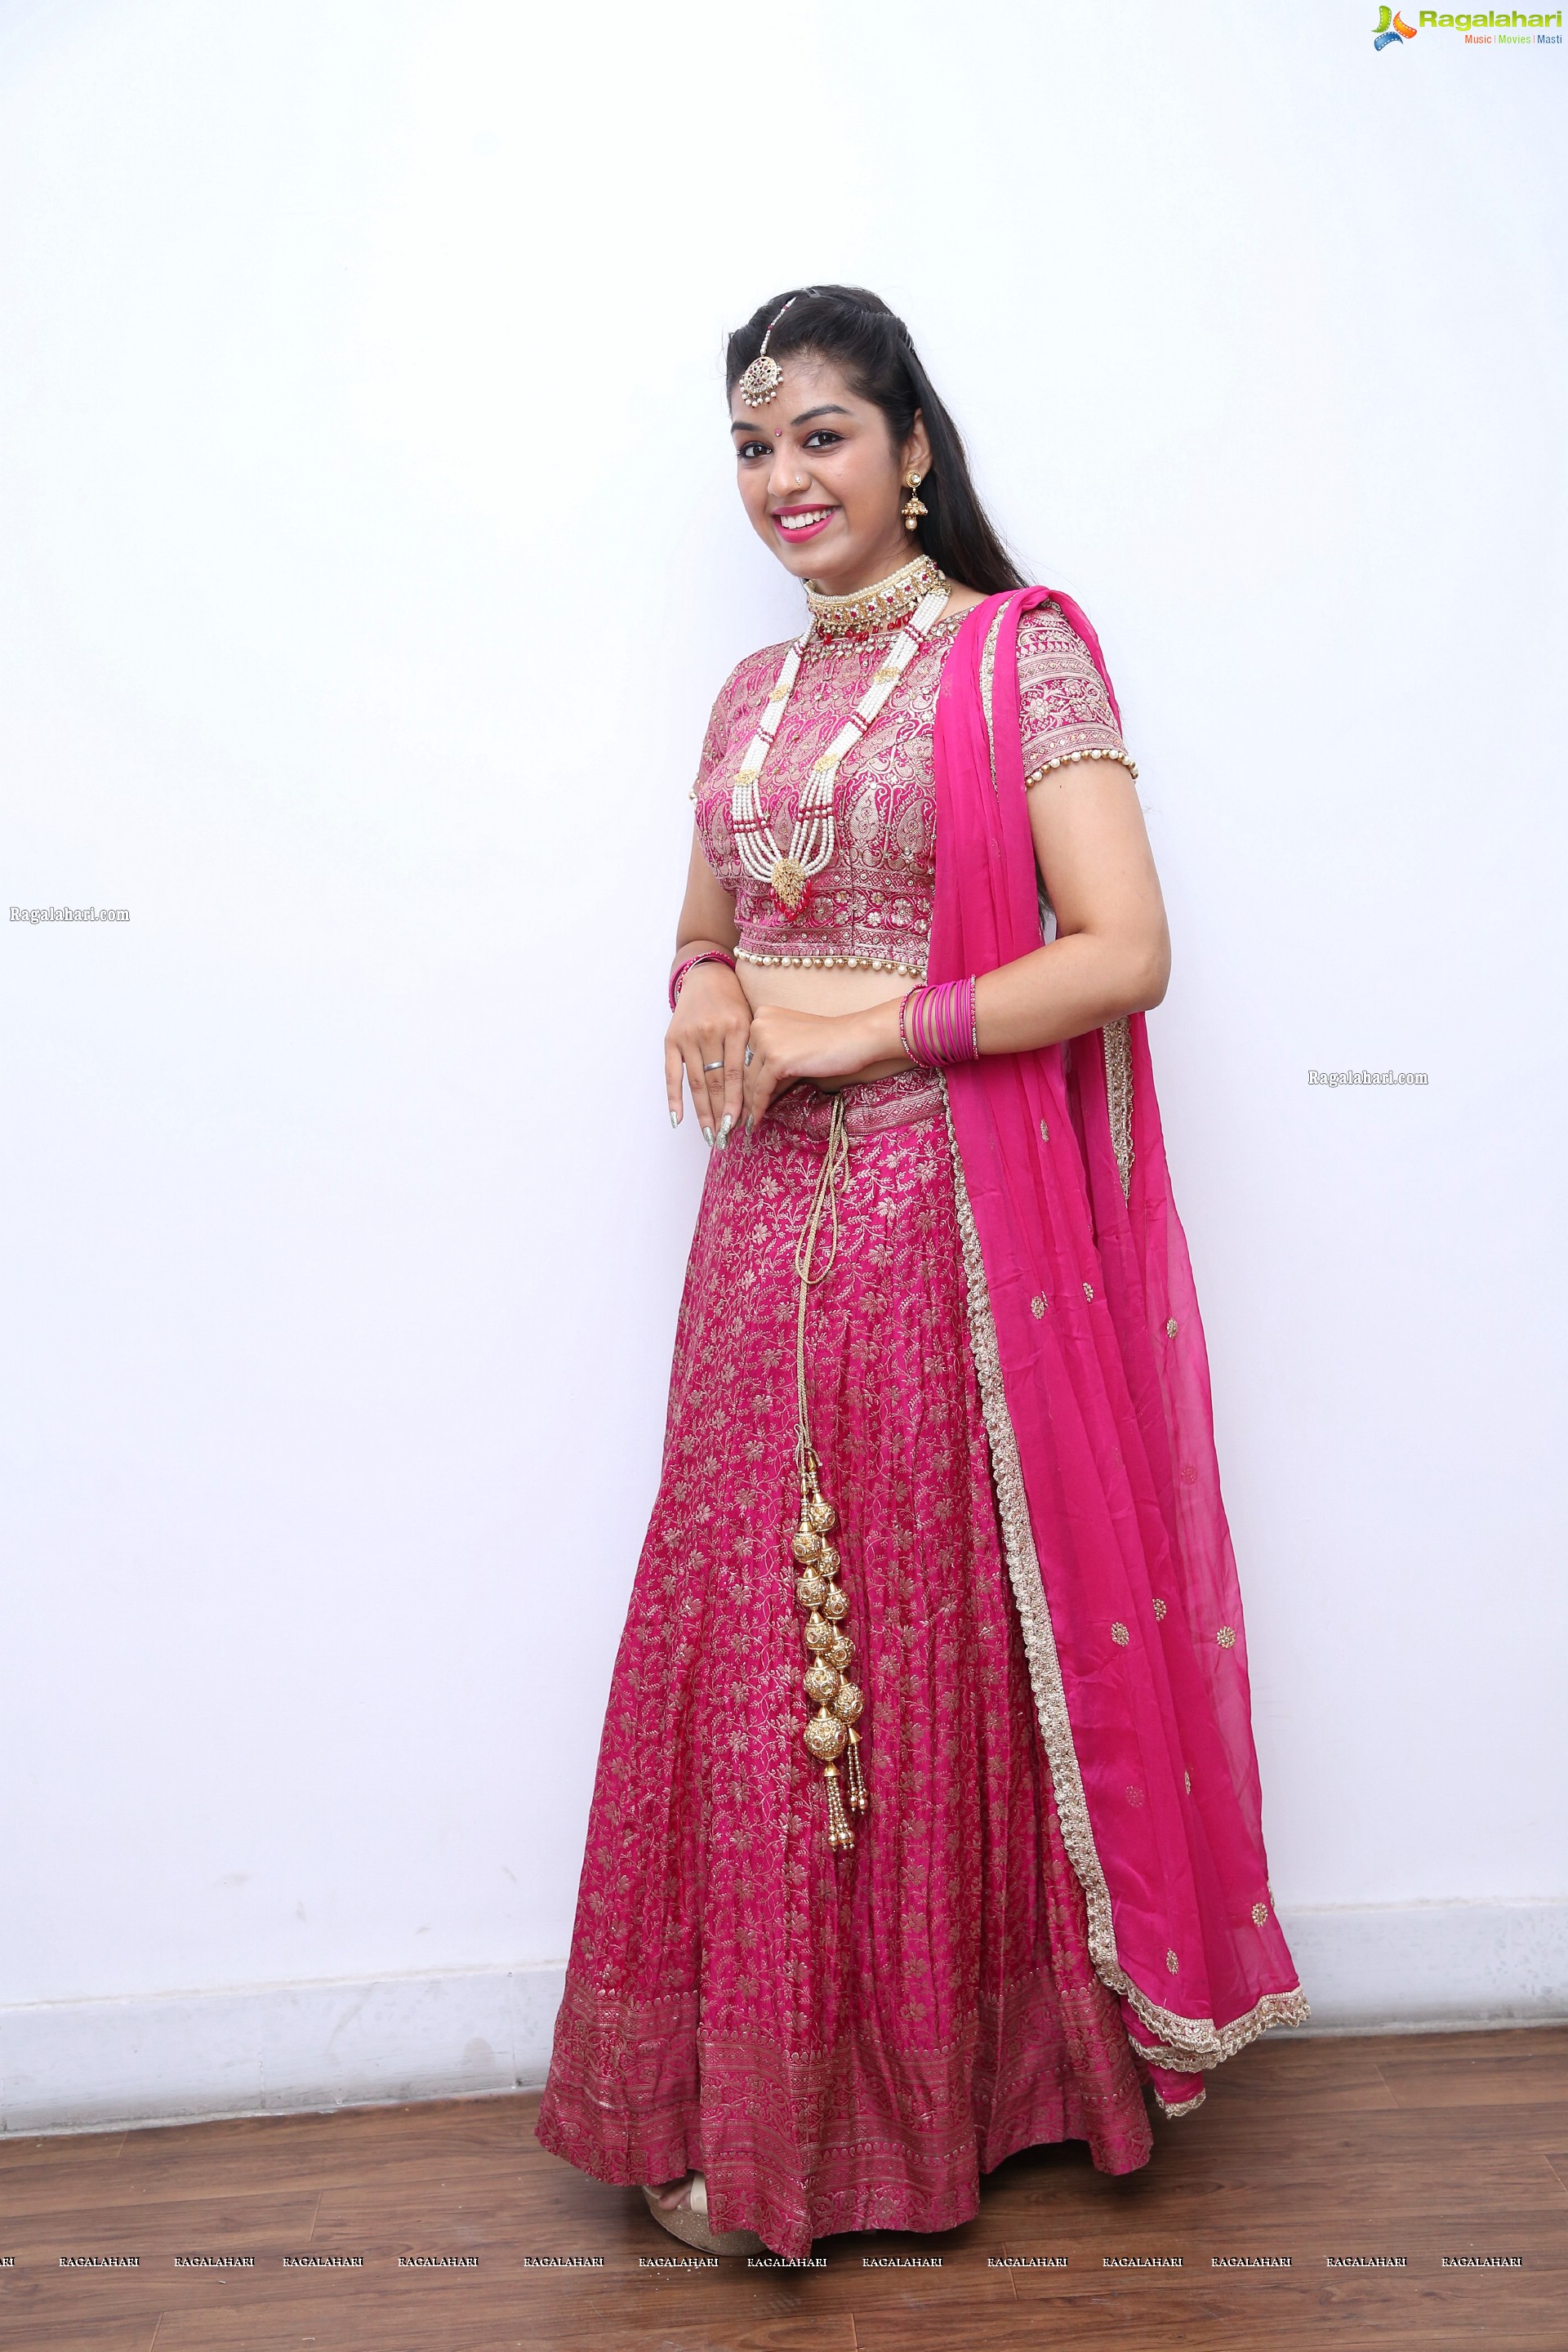 Shruthi Sharma in Rani Pink Lehenga Choli, HD Photo Gallery